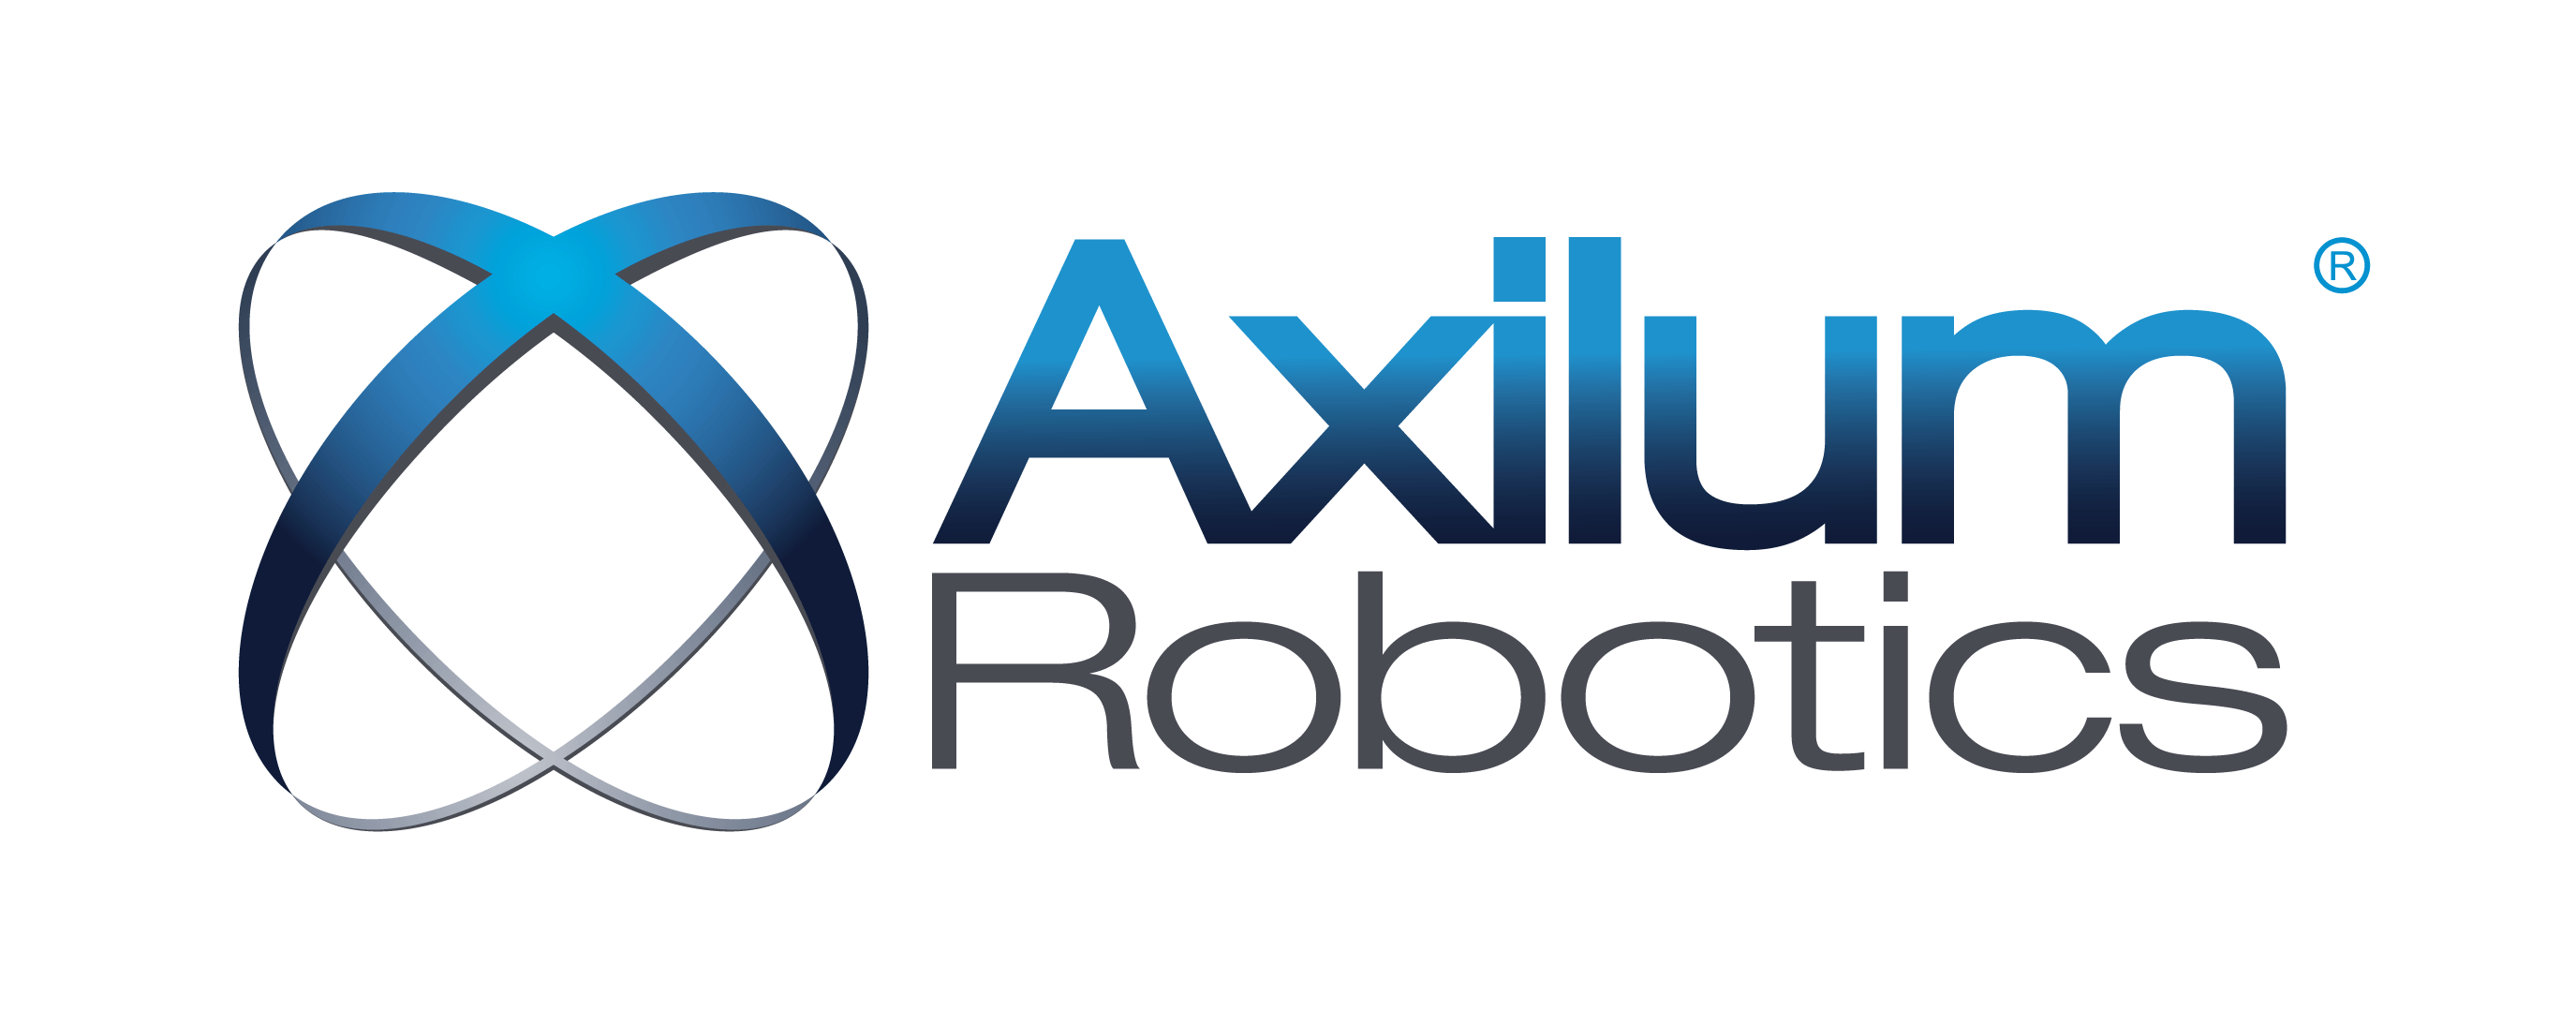 Robot Company Logo - Axilum Robotics - Robot for transcranial magnetic stimulation